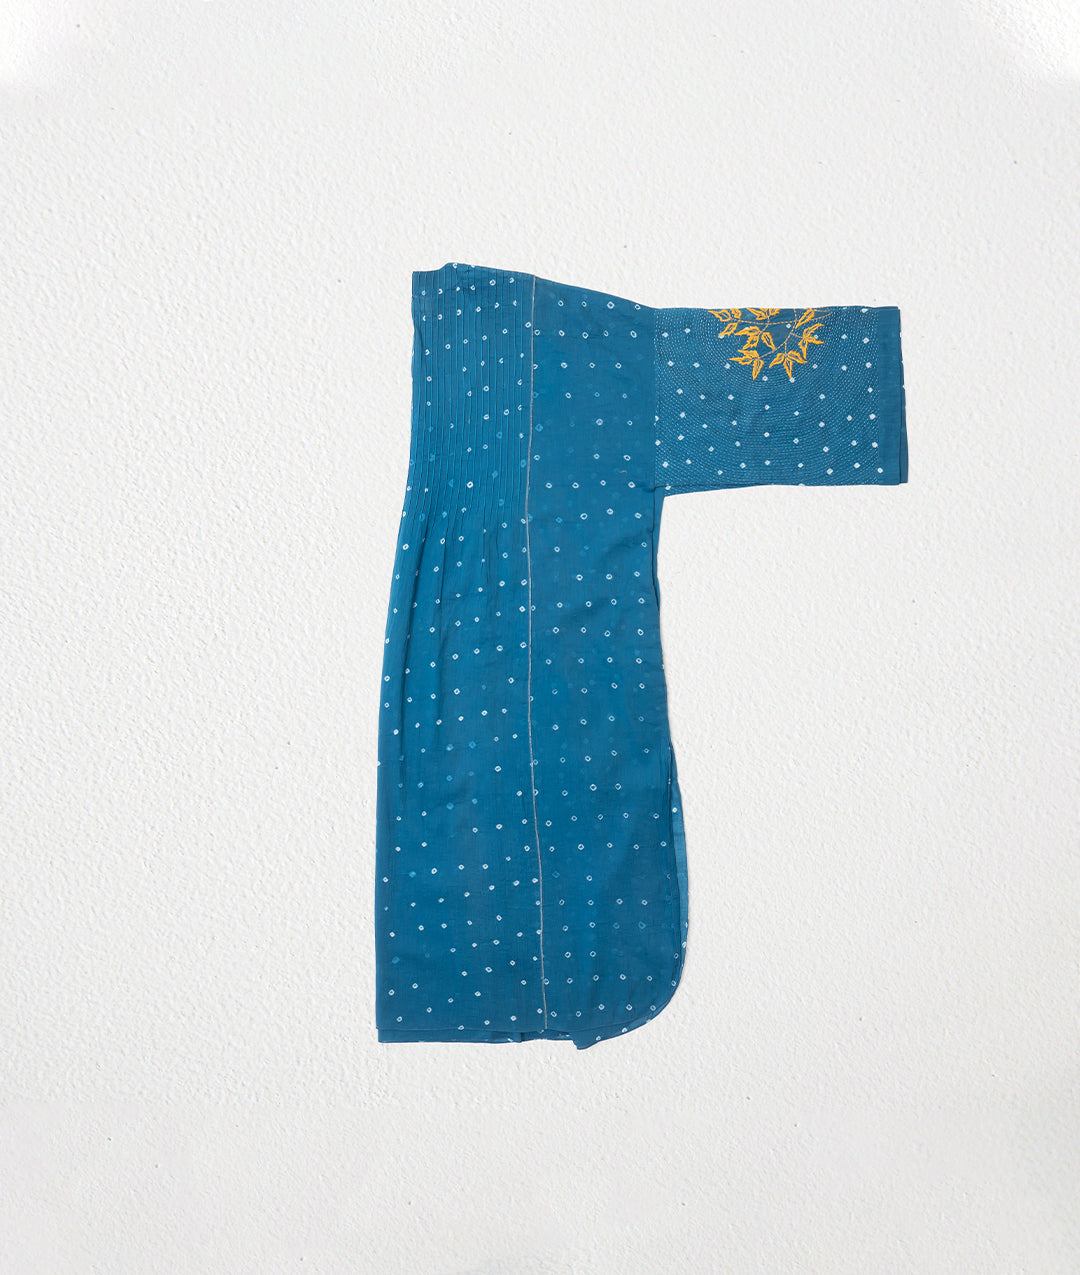 Rania Embroidered Kaftan dress